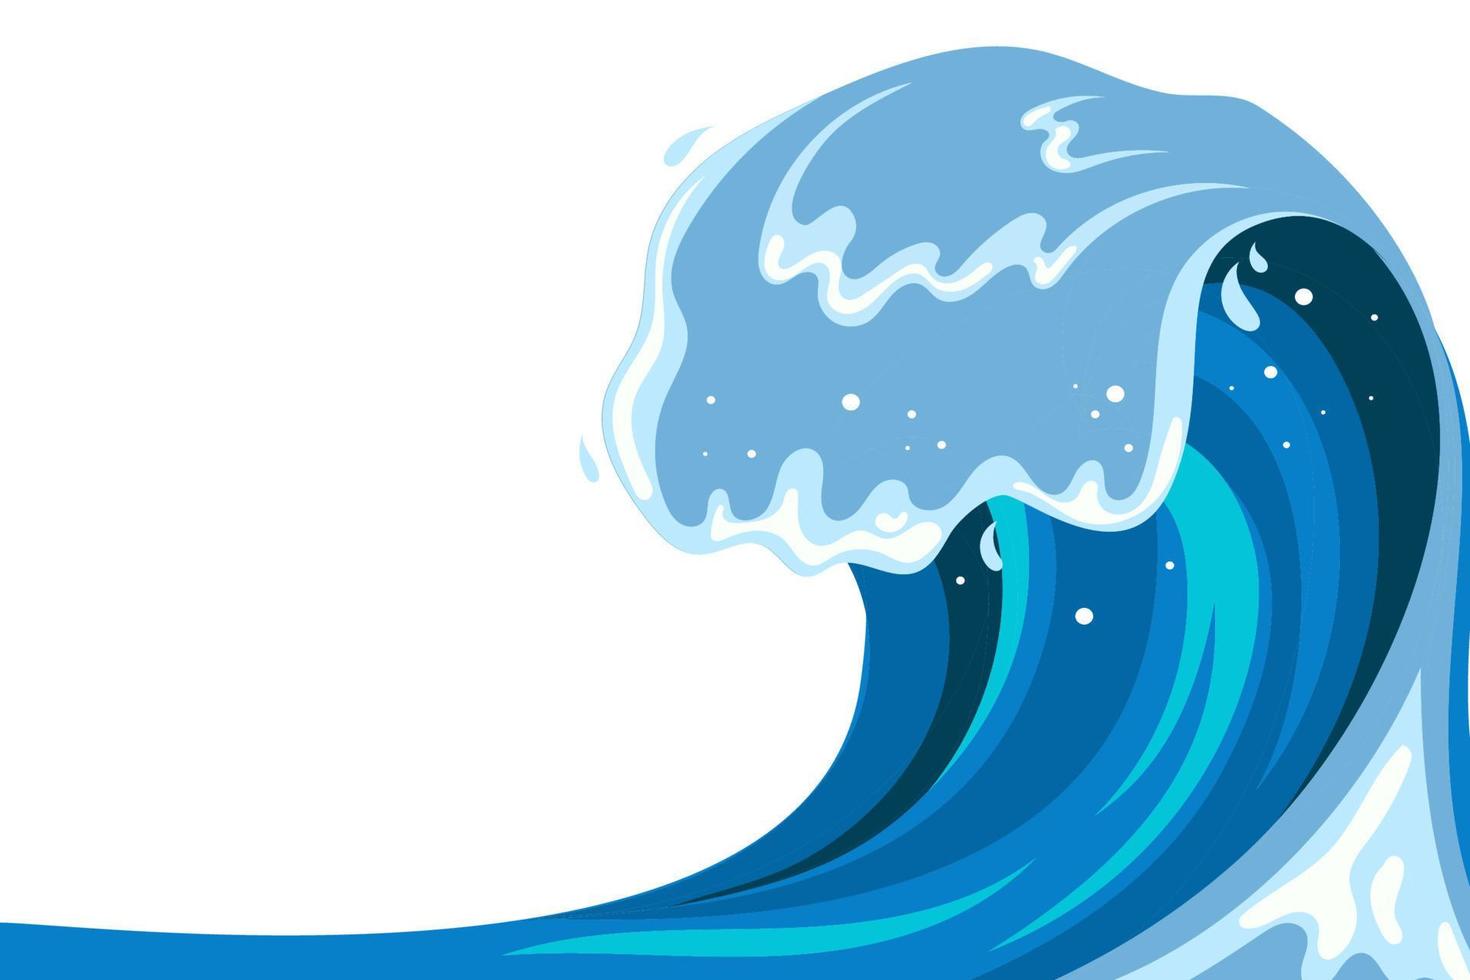 ola tsumani en estilo de dibujos animados planos. gran salpicadura de agua tropical azul con espuma blanca. ilustración vectorial aislado en fondo blanco vector